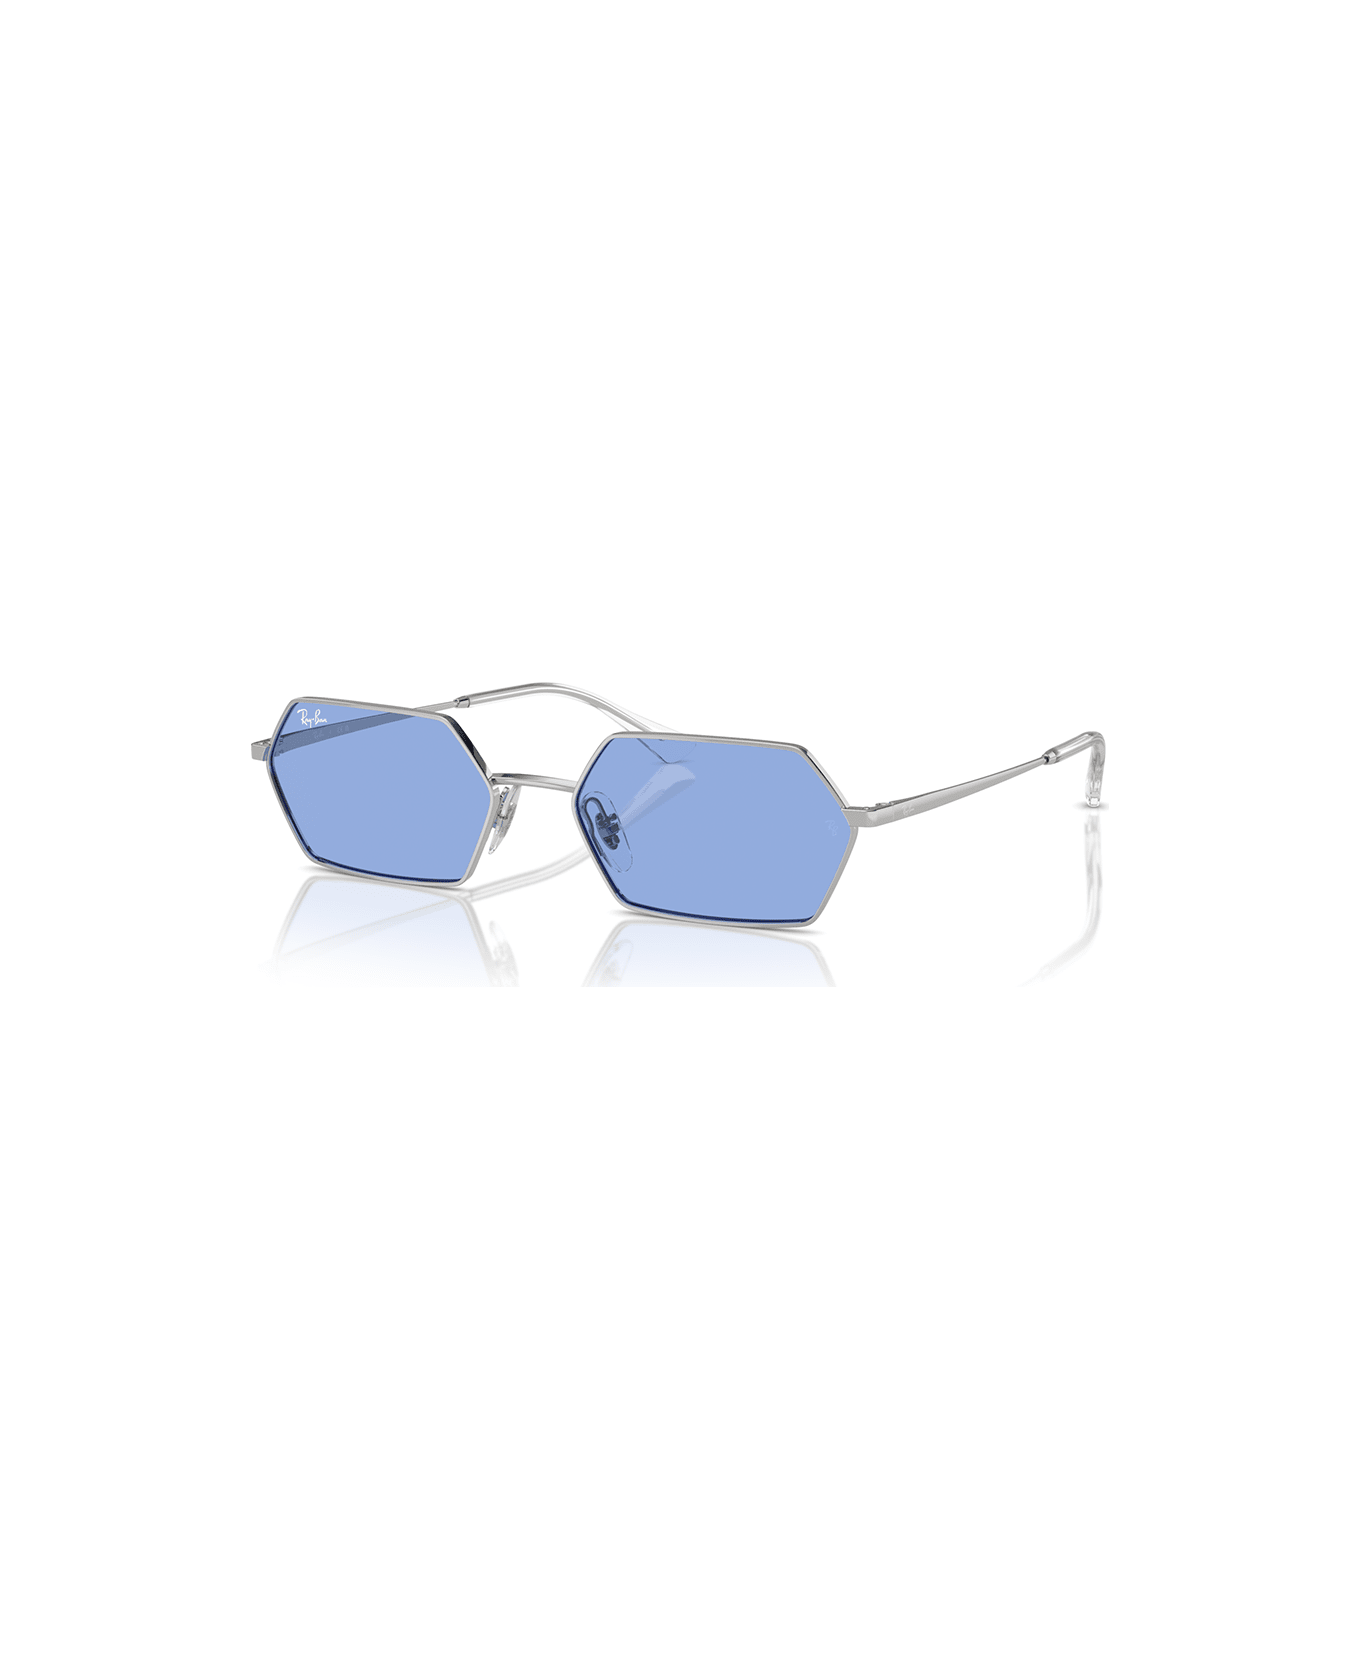 Ray-Ban Sunglasses - Silver/Blu サングラス